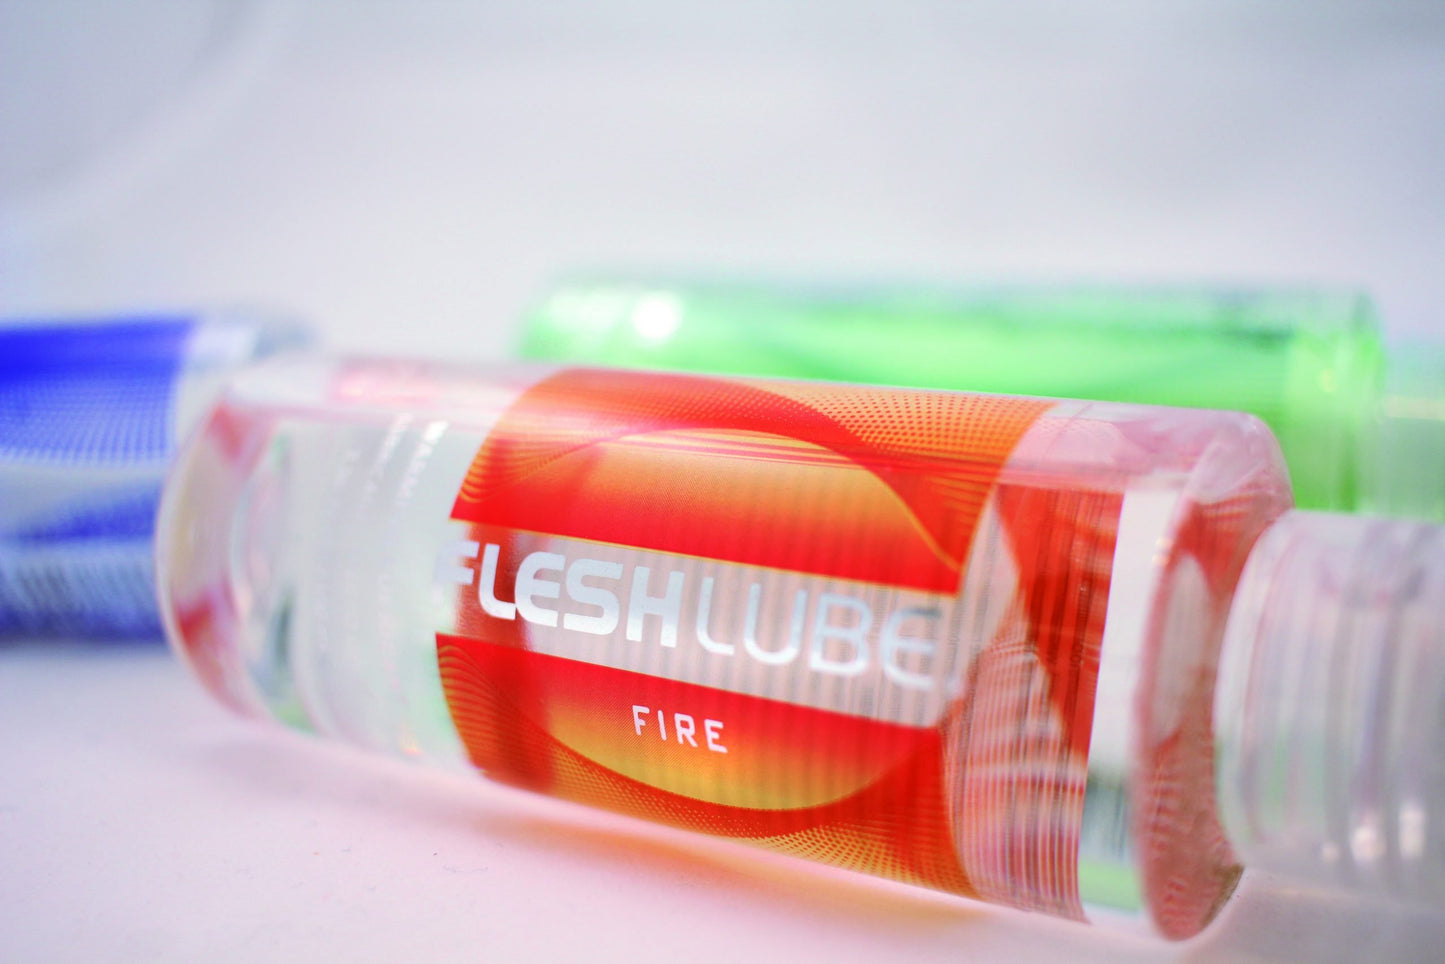 Fleshlube Fire 4 oz